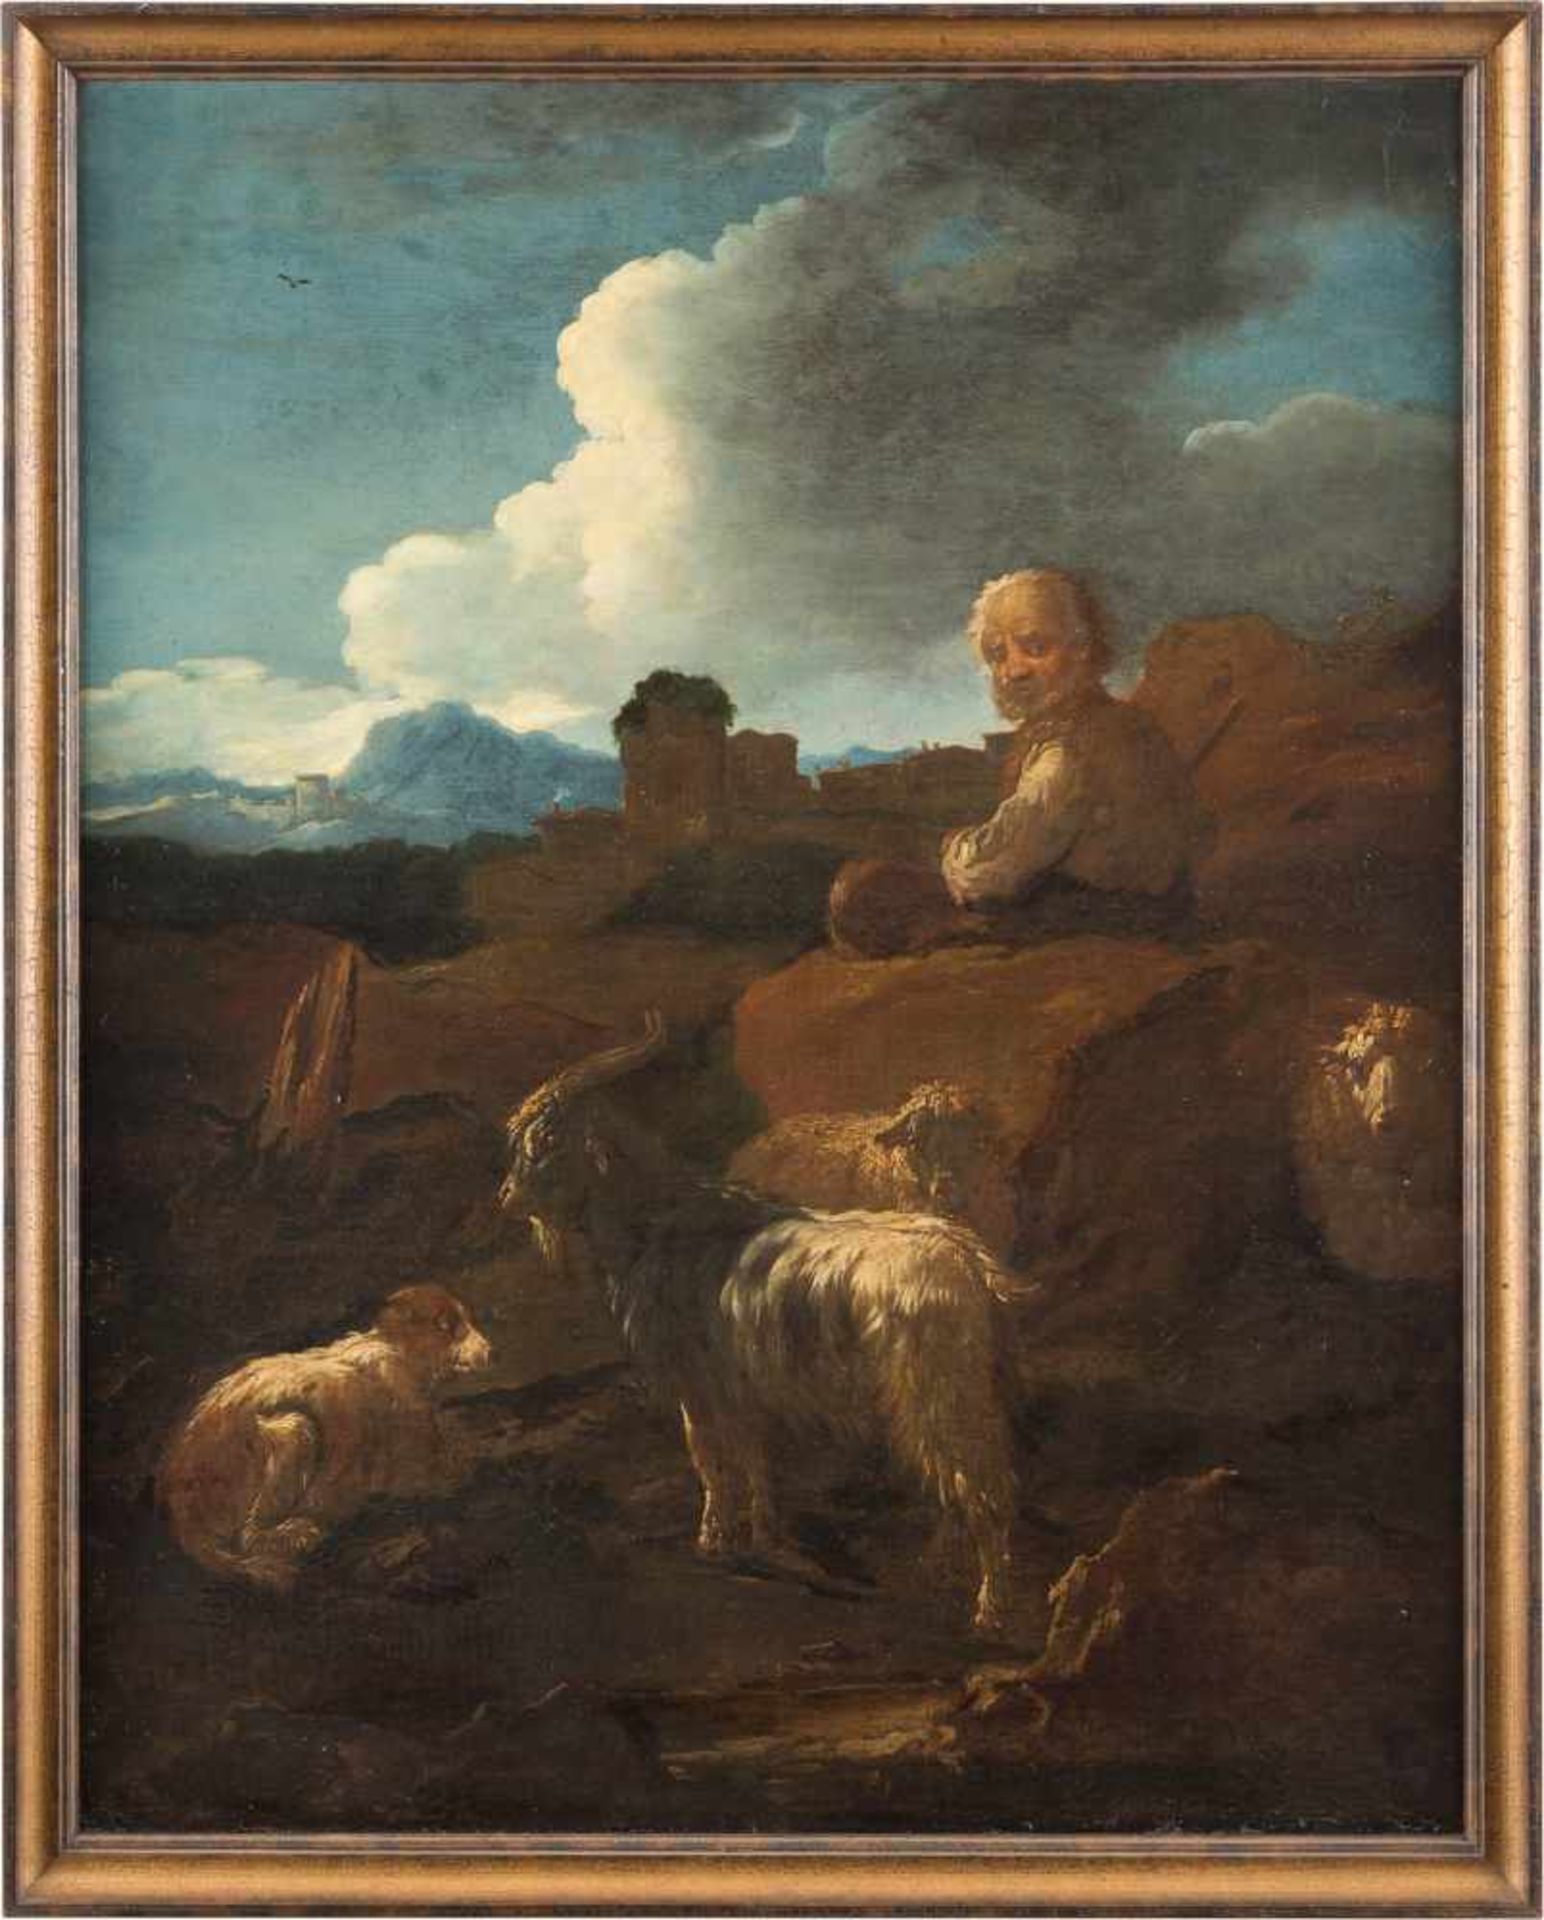 PHILIPP PETER ROOS (AUCH ROSA DA TIVOLI)1655/1657 Frankfurt am Main - 1706 RomHIRTE MIT SCHAFEN, - Bild 2 aus 2